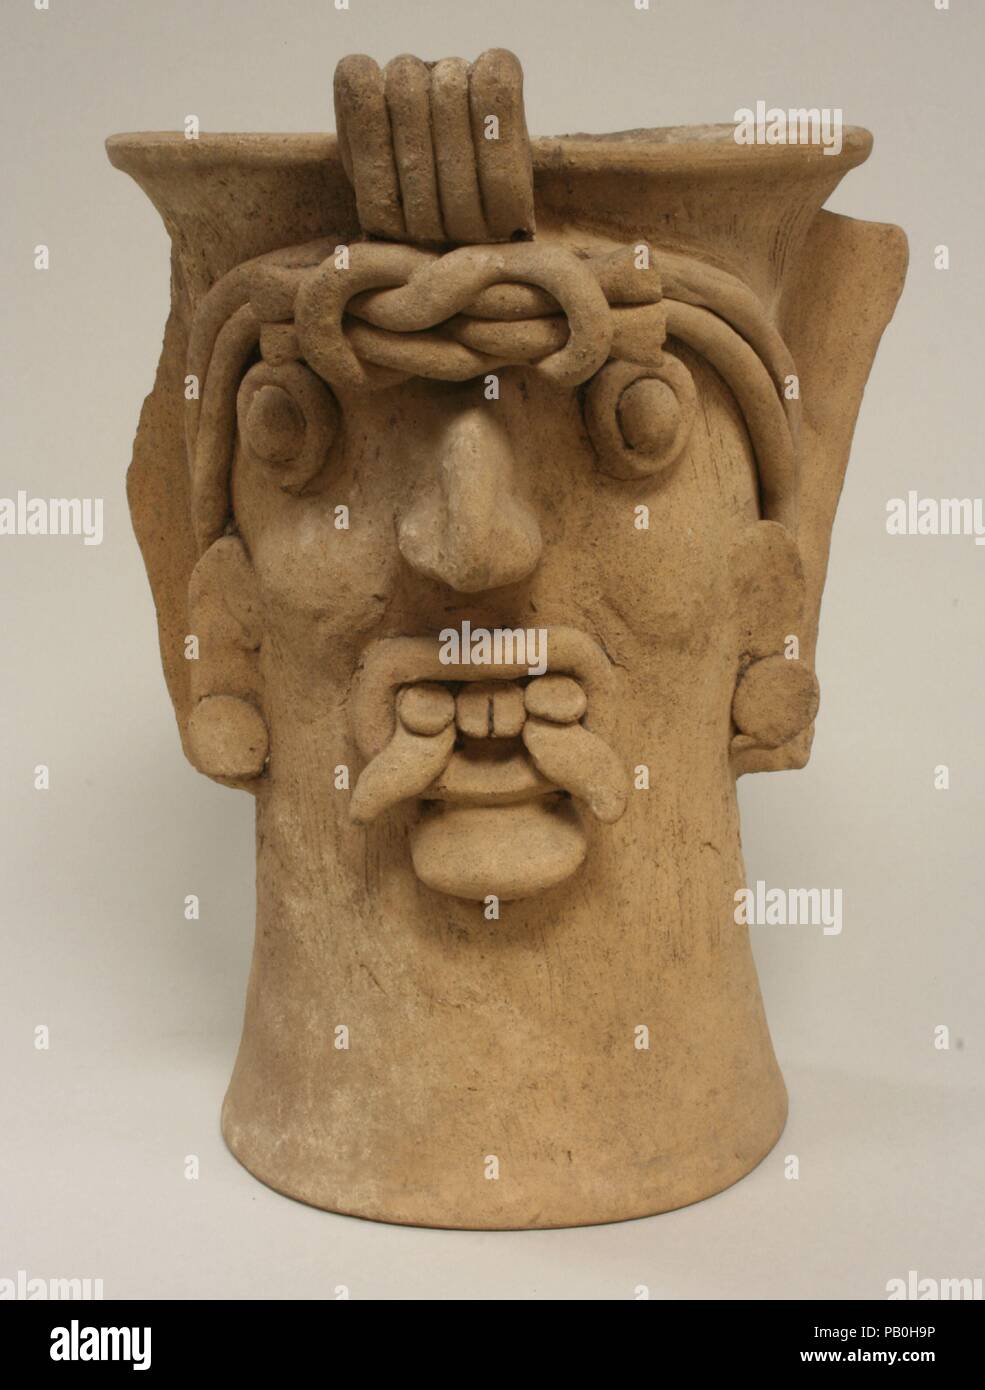 Ceramic Head Vessel. Culture: Toltec (?). Dimensions: H. 12 1/16 x W. 9 1/8 x D. 9 5/8 in. (30.7 x 23.2 x 24.5 cm). Date: 10th-13th century. Museum: Metropolitan Museum of Art, New York, USA. Stock Photo